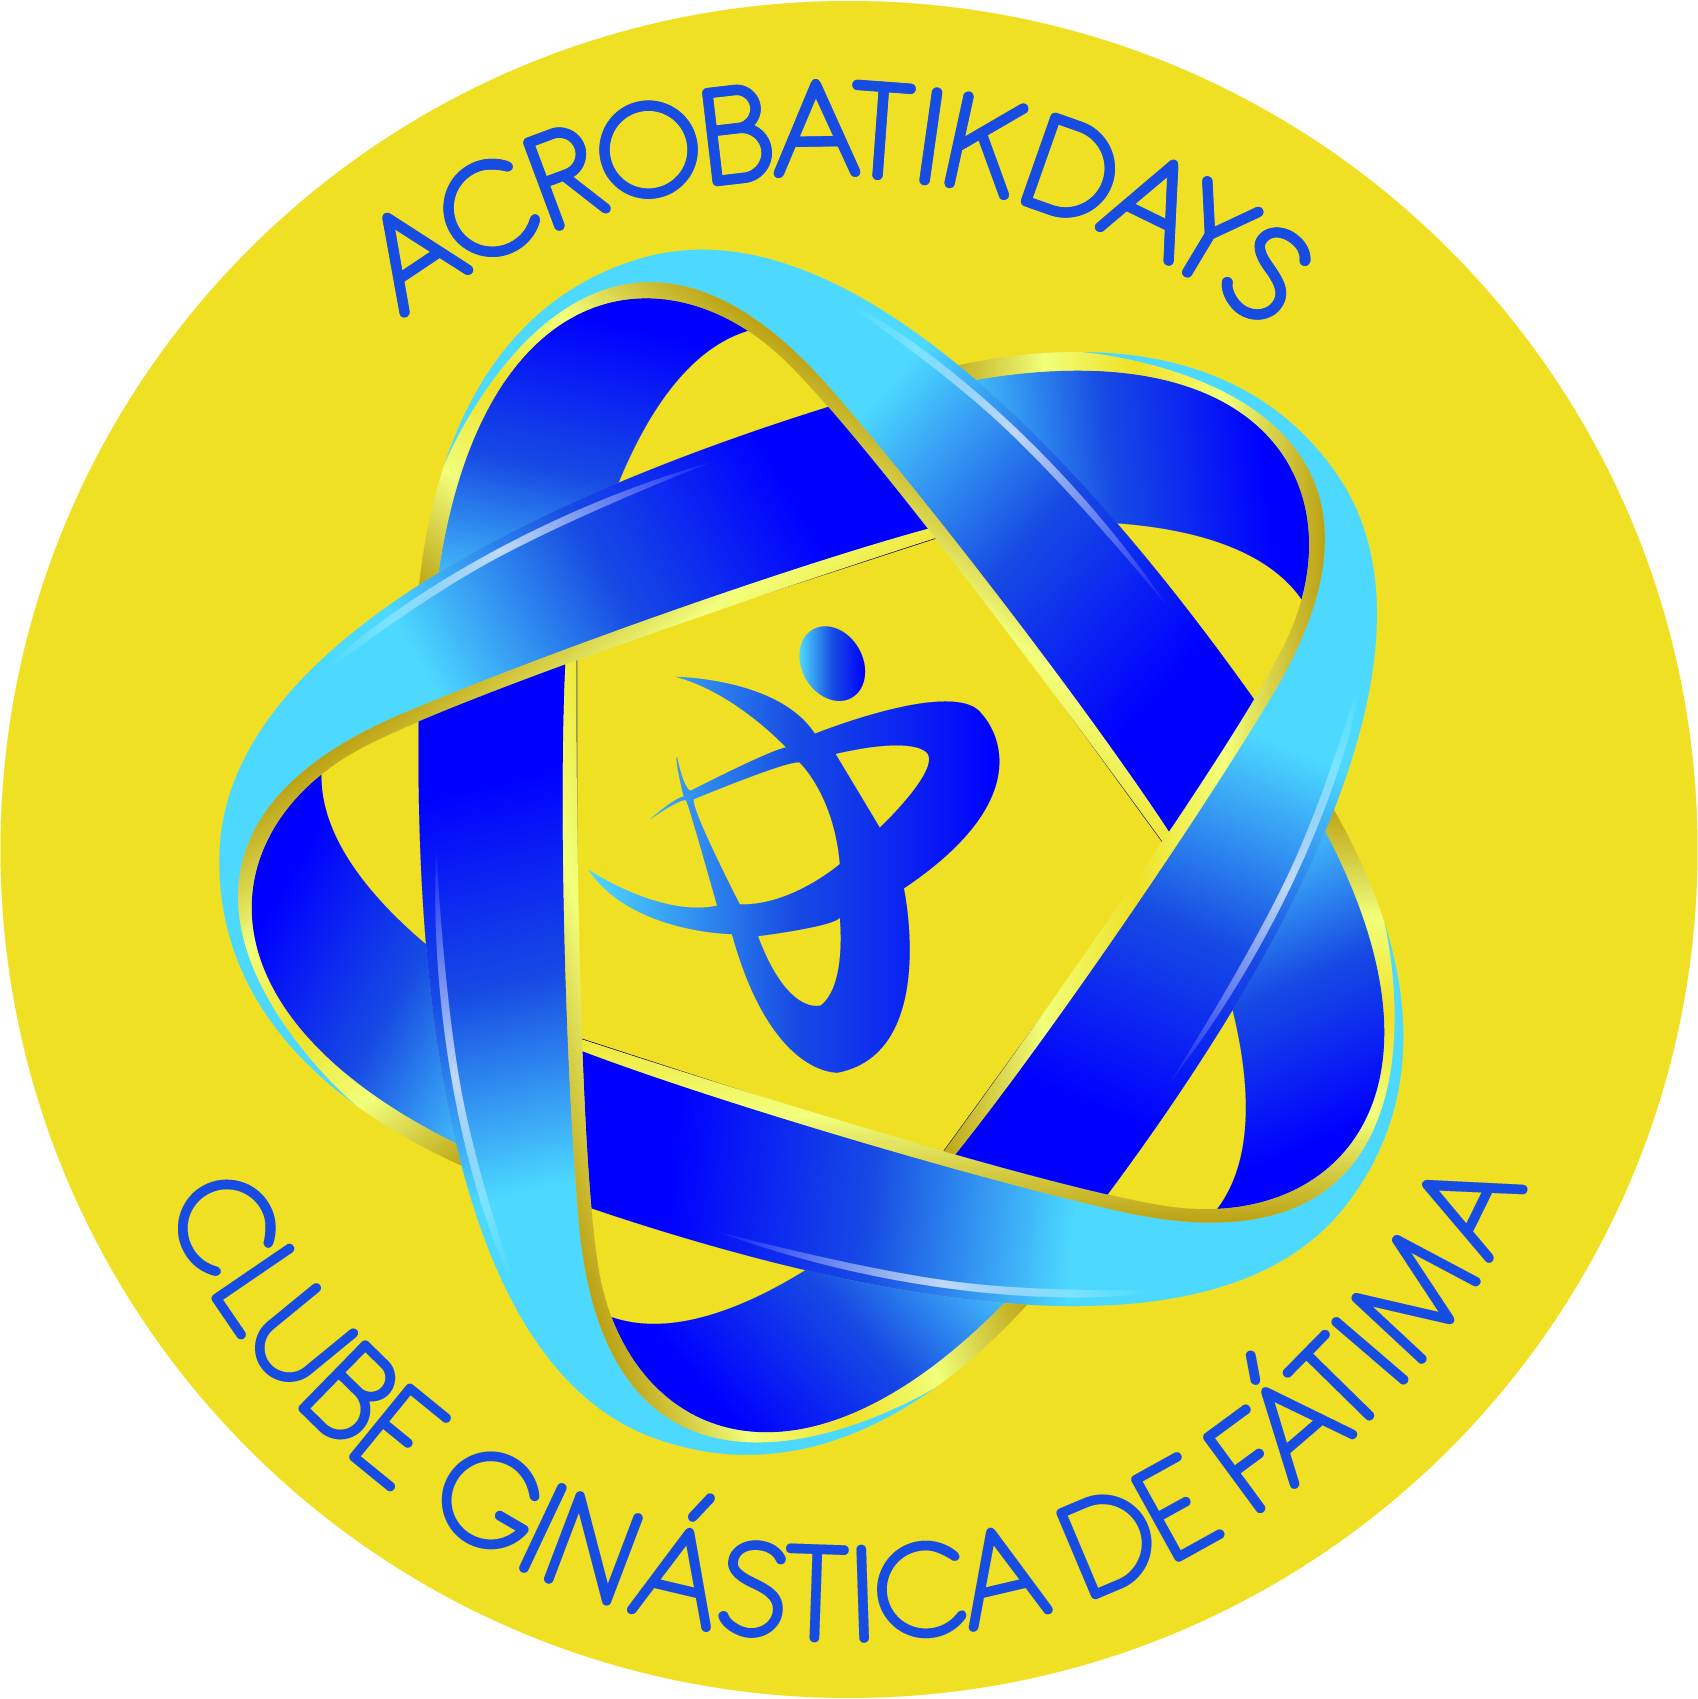 Acrobatikdays- Clube Ginástica de Fátima